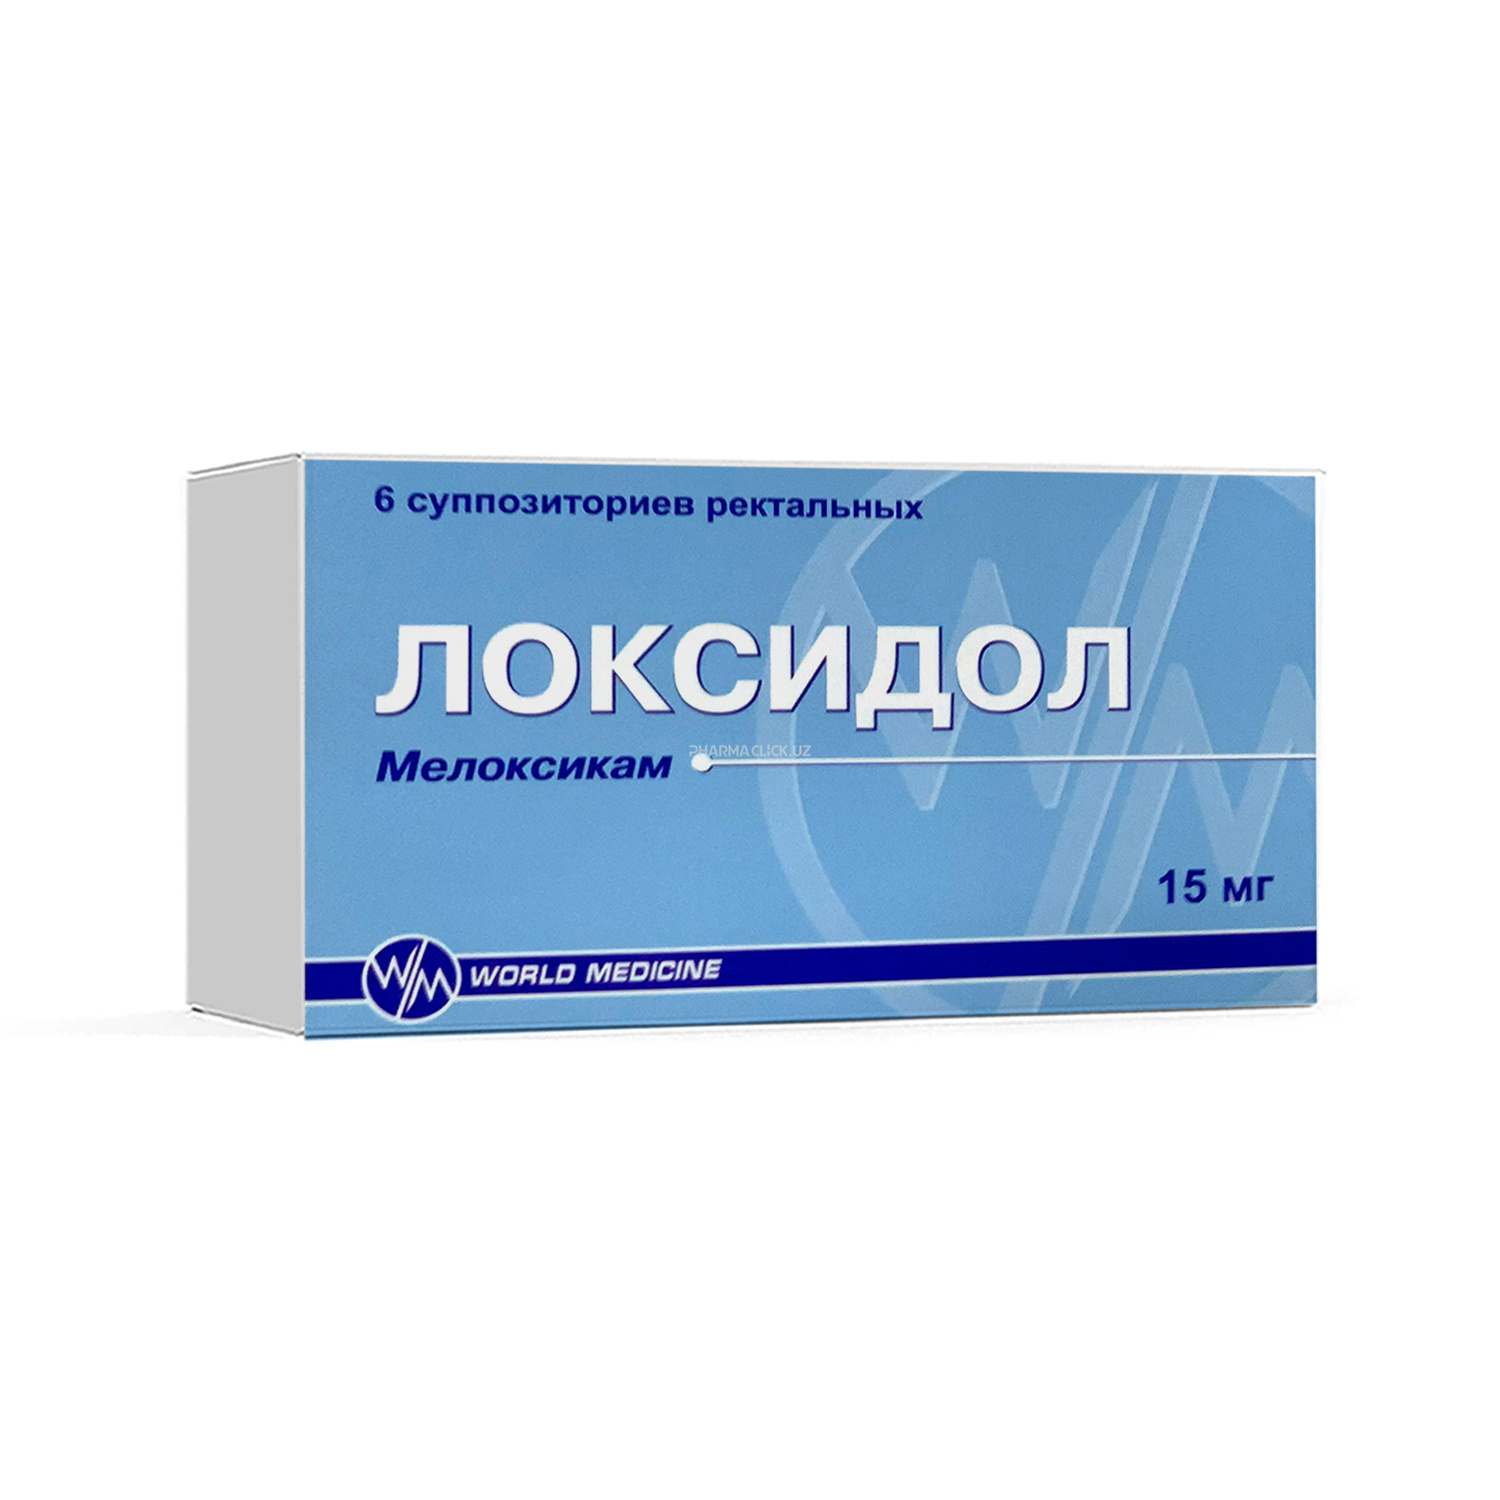 Loksidol  supp. rekt. 15 mg. №6